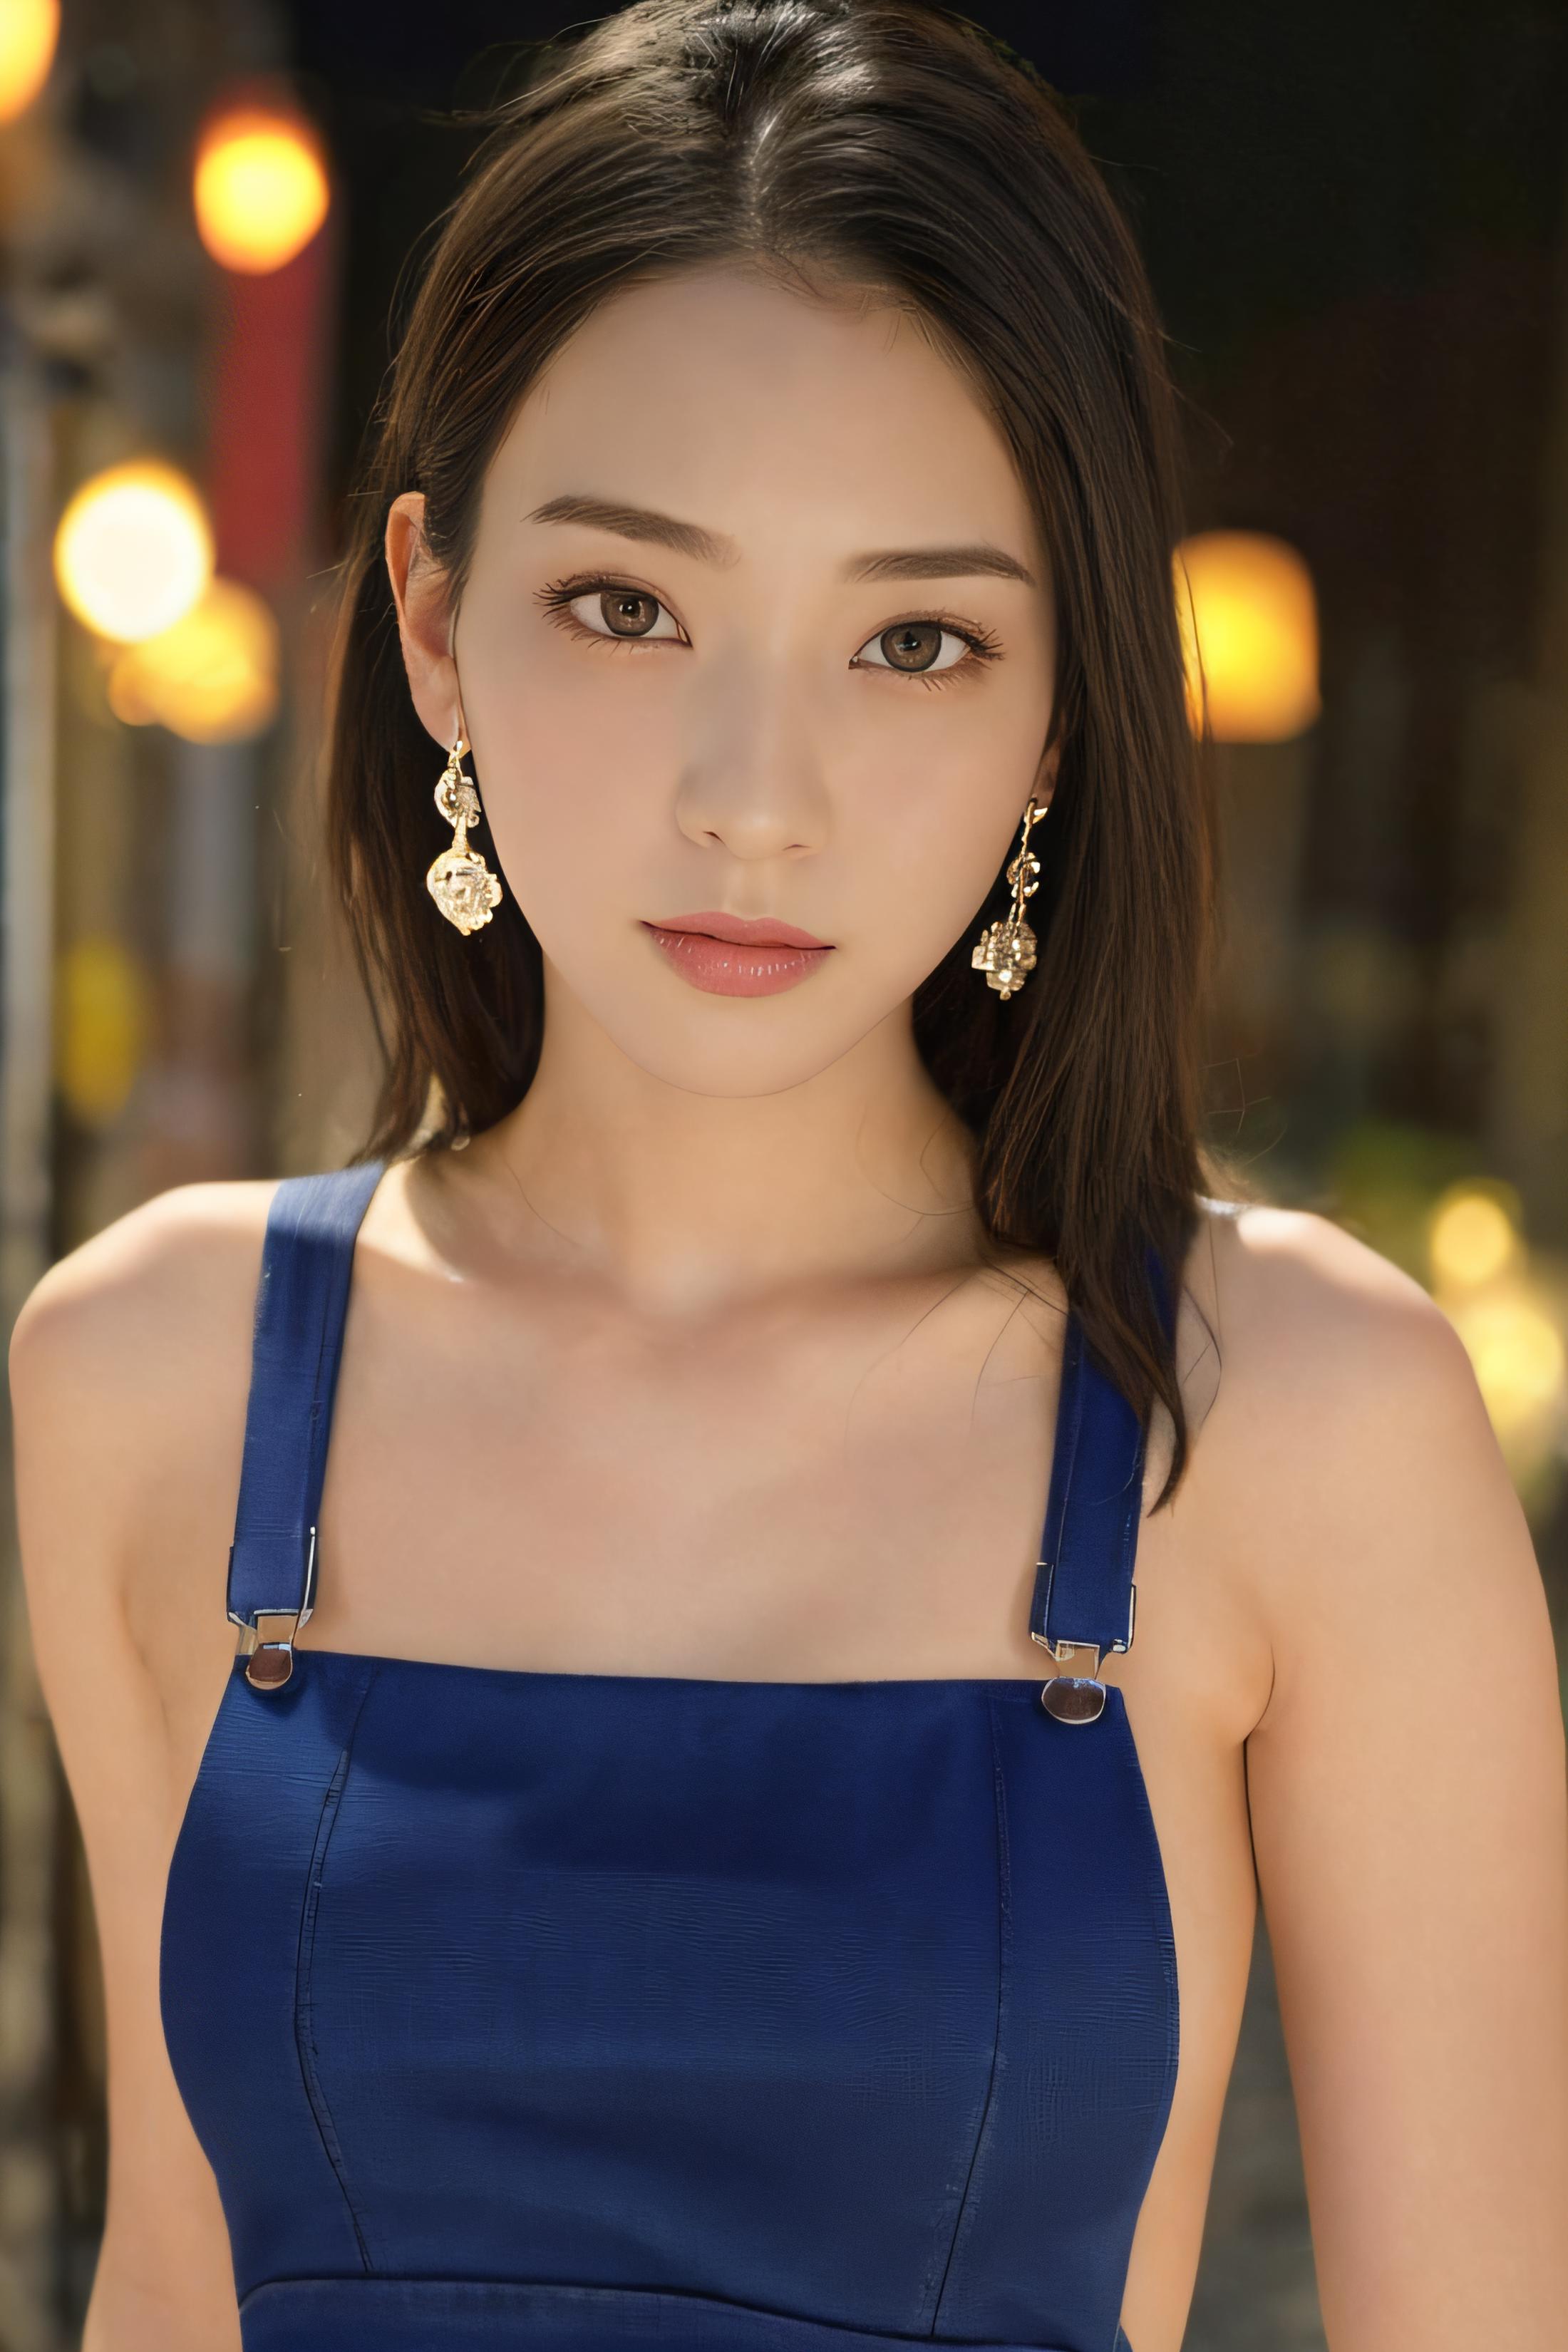 suzu honjo AV actress image by luukienquoc